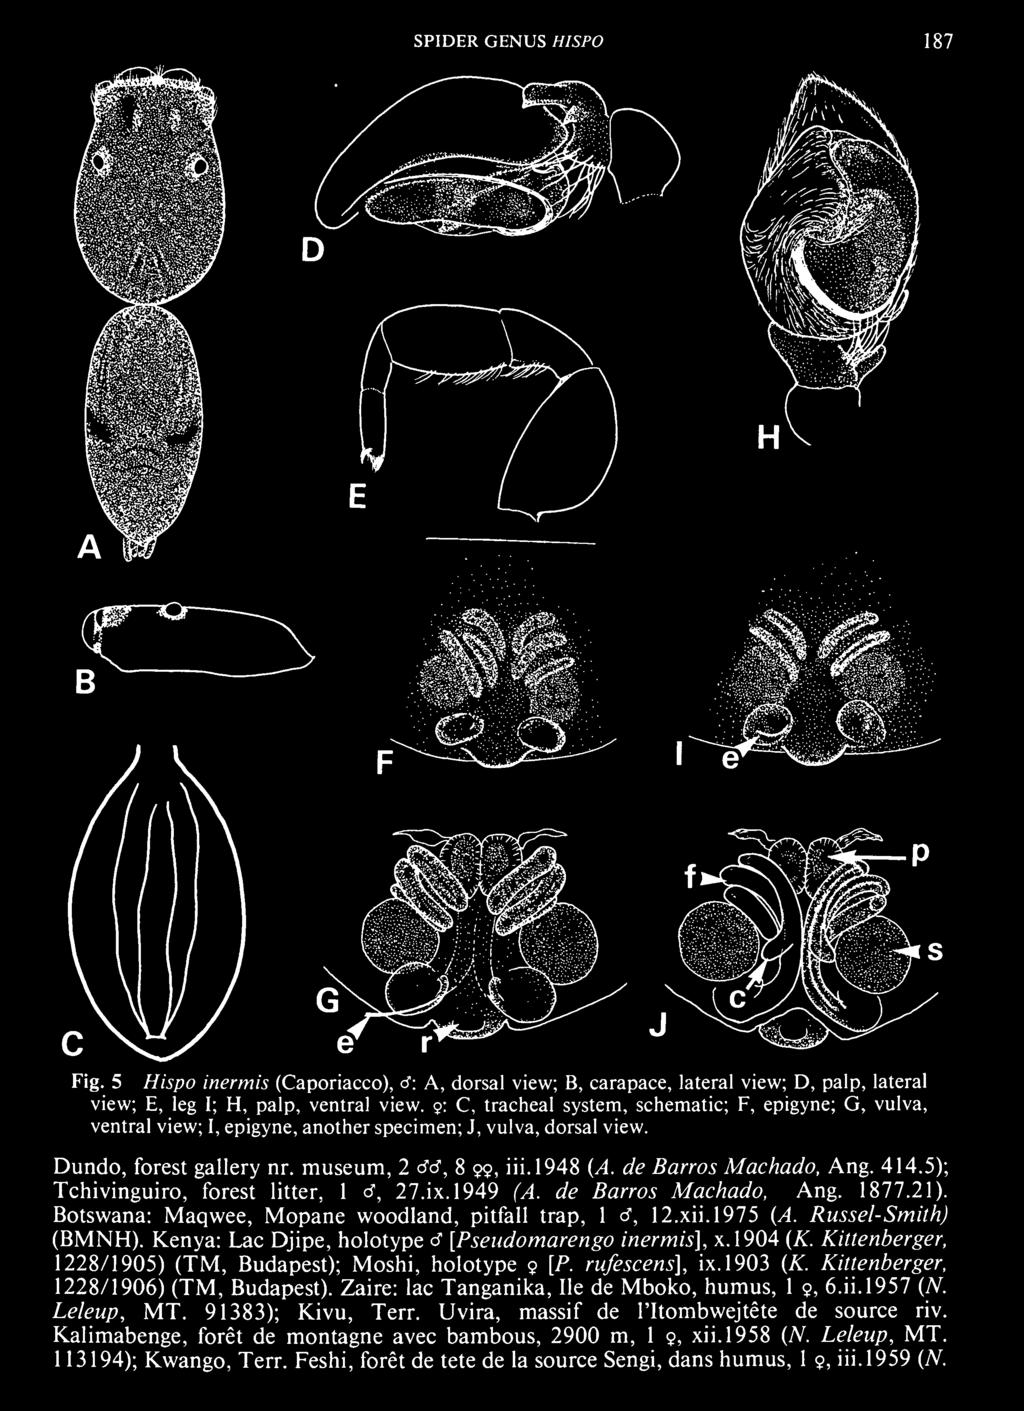 Kittenberger, 1228/1905) (TM, Budapest); Moshi, holotype 9 [P. rufescens], ix.1903 (K. Kittenberger, 1228/1906) (TM, Budapest). Zaire: lac Tanganika, He de Mboko, humus, 1 9, 6.H.1957 (N.